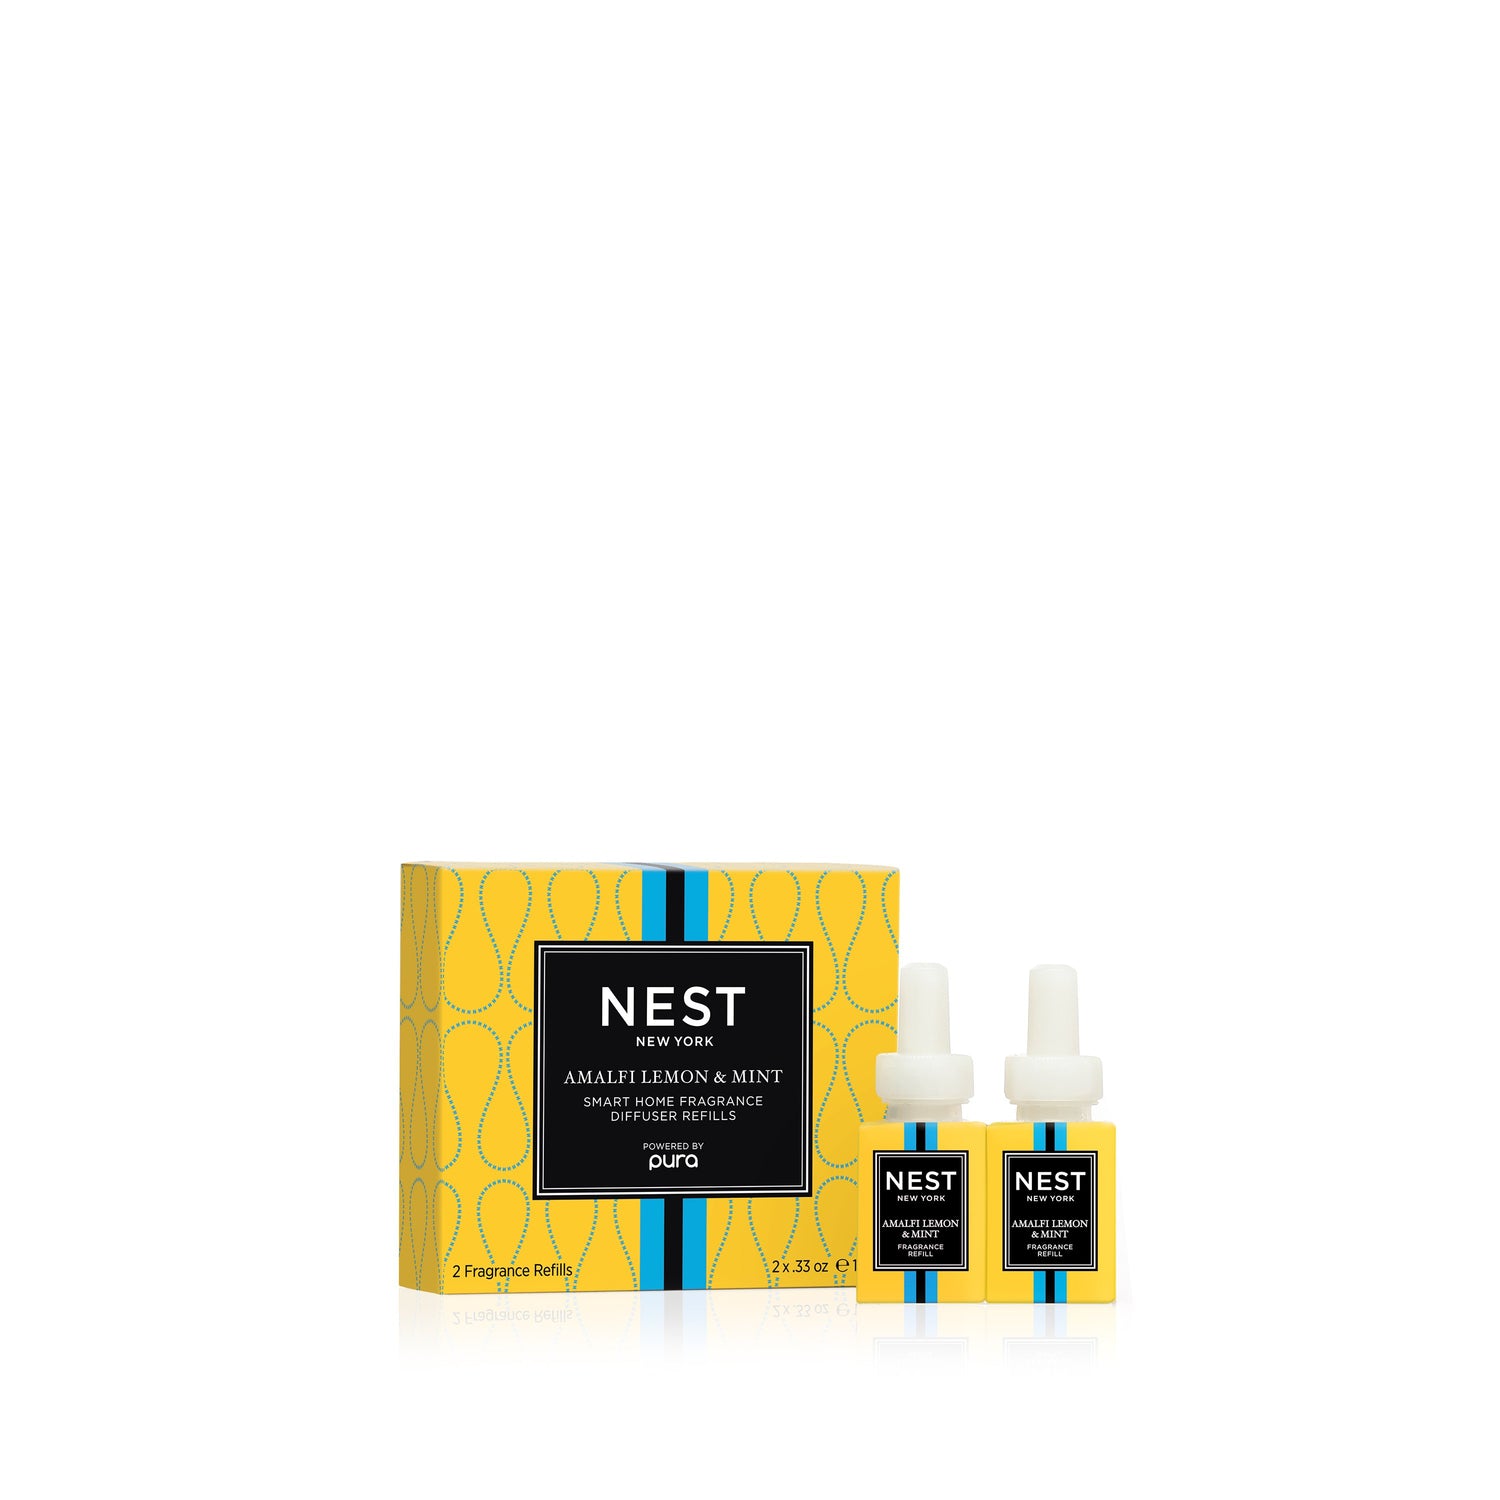 Nest Pura Diffuser Refill Scents in Amalfi Lemon & Mint at Wrapsody